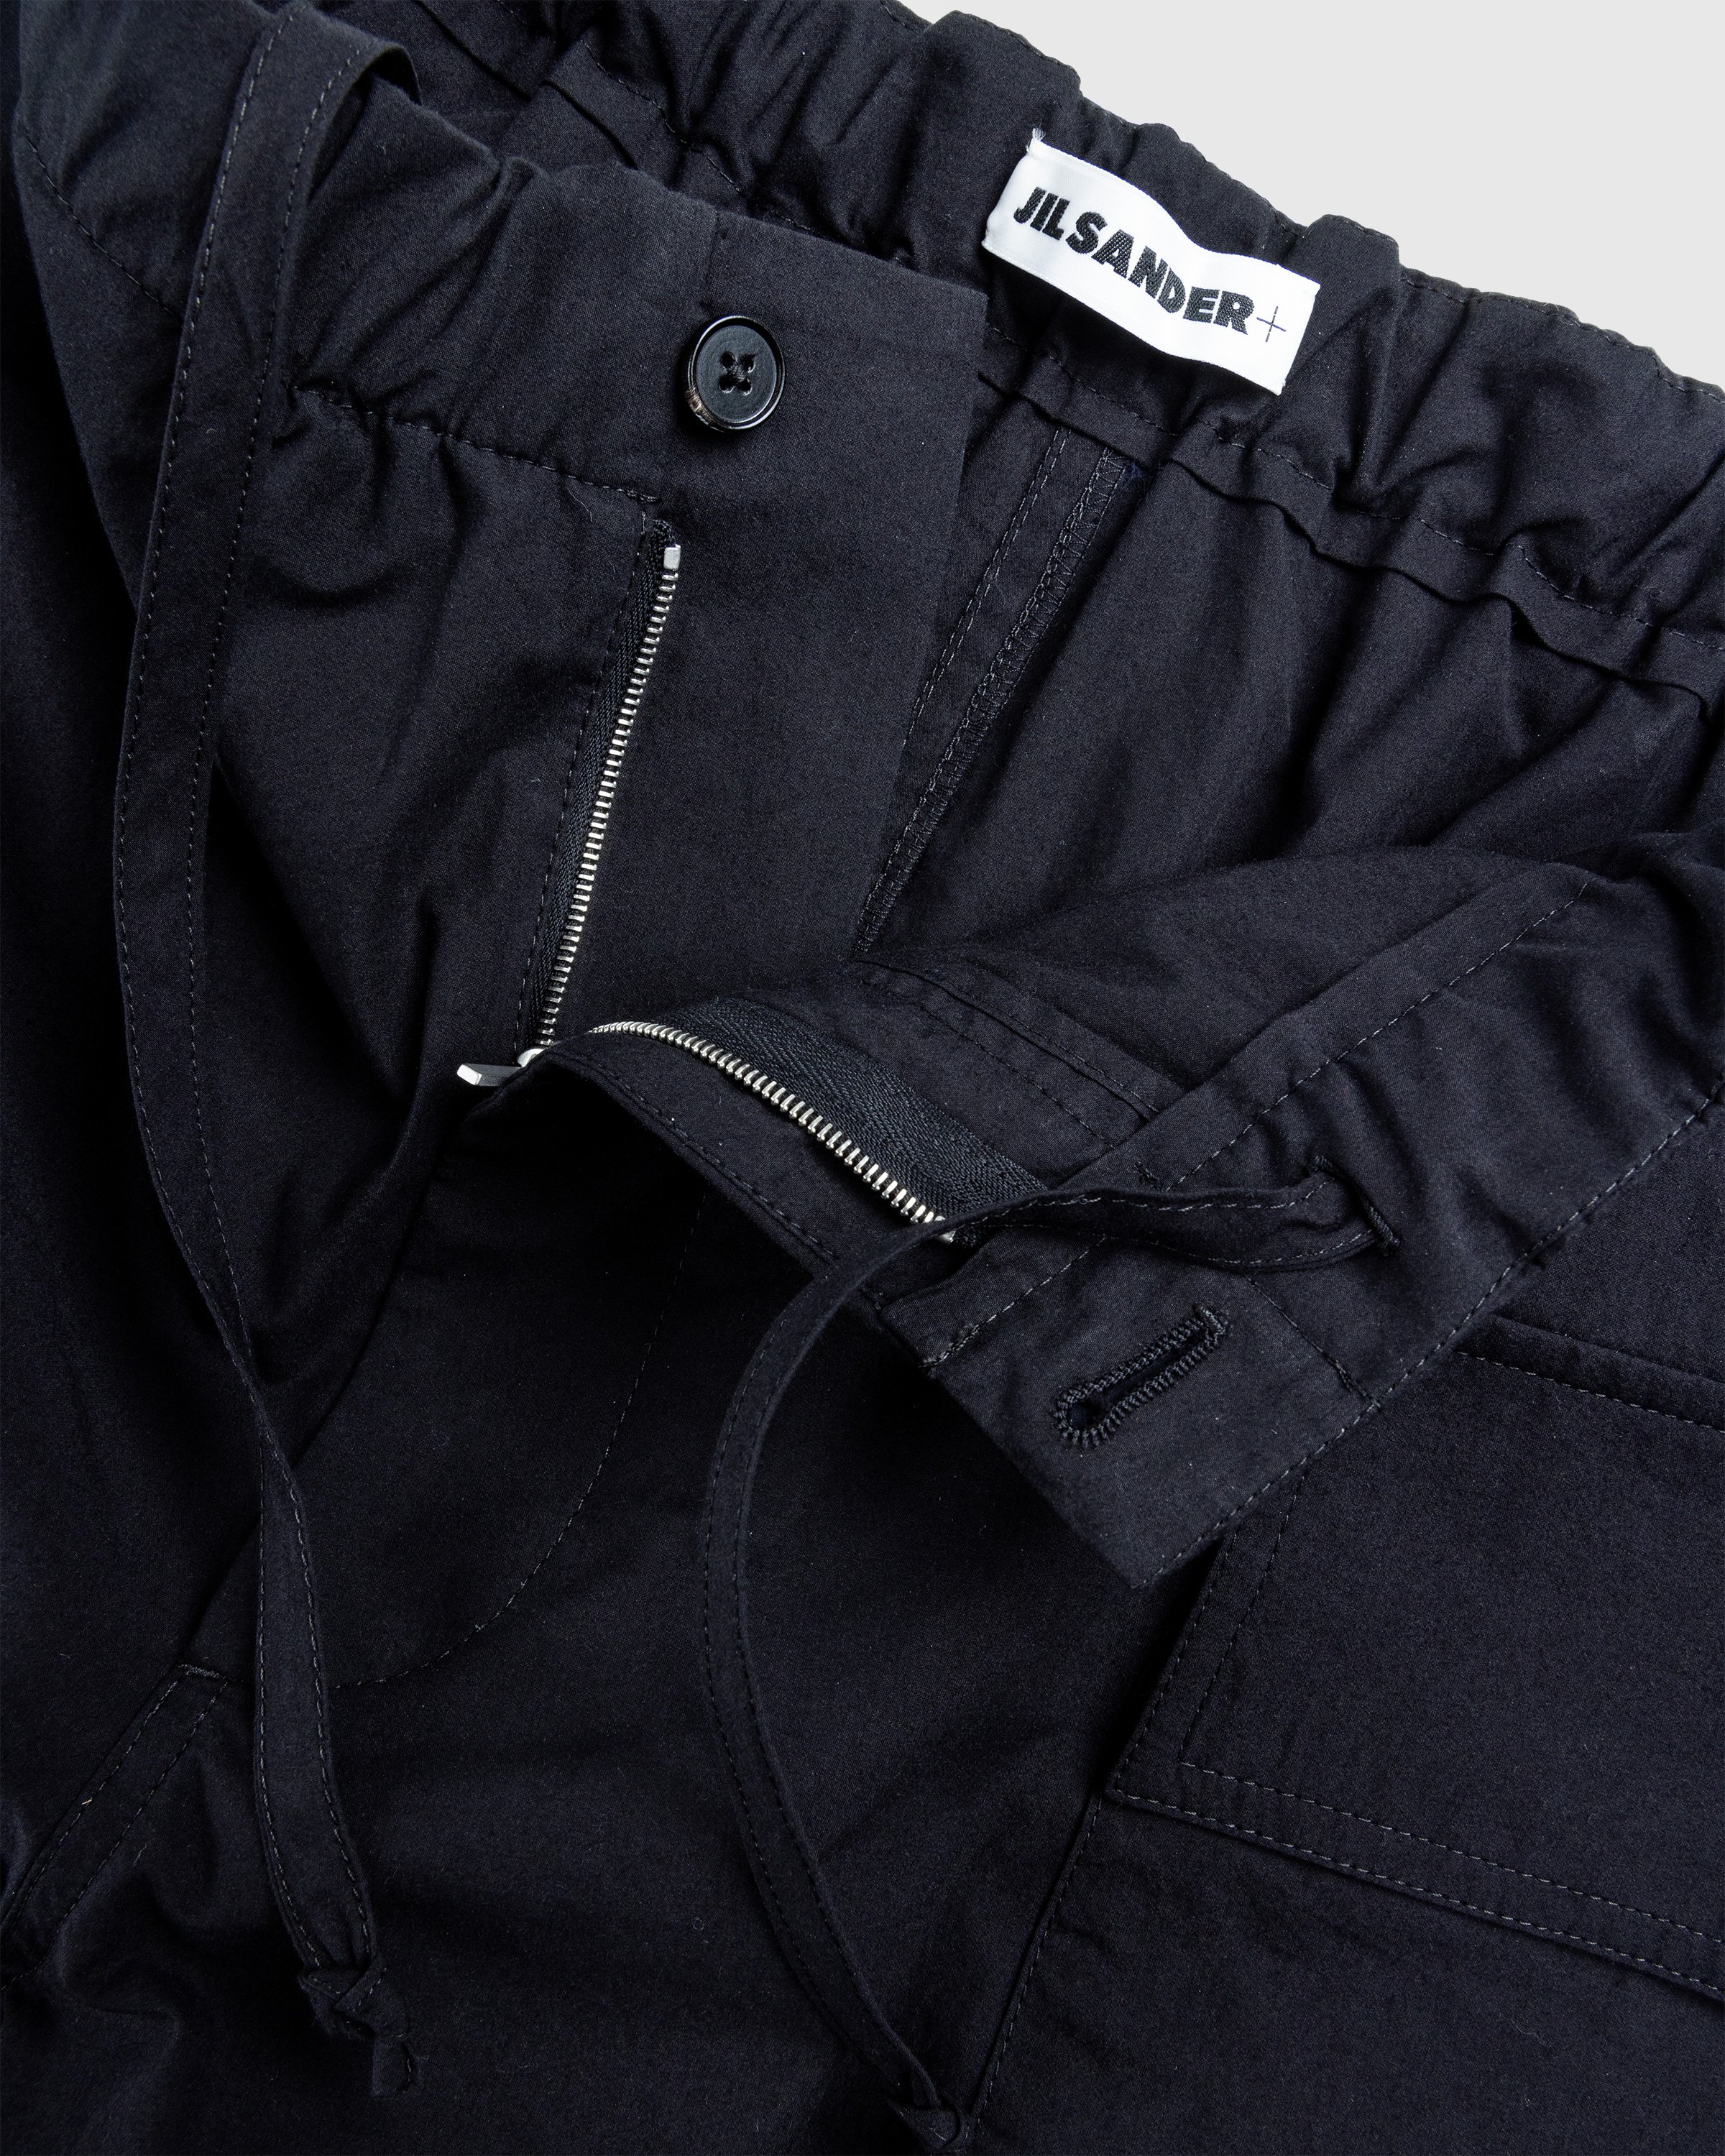 Jil Sander - Trouser 94 Short - Clothing - Black - Image 5